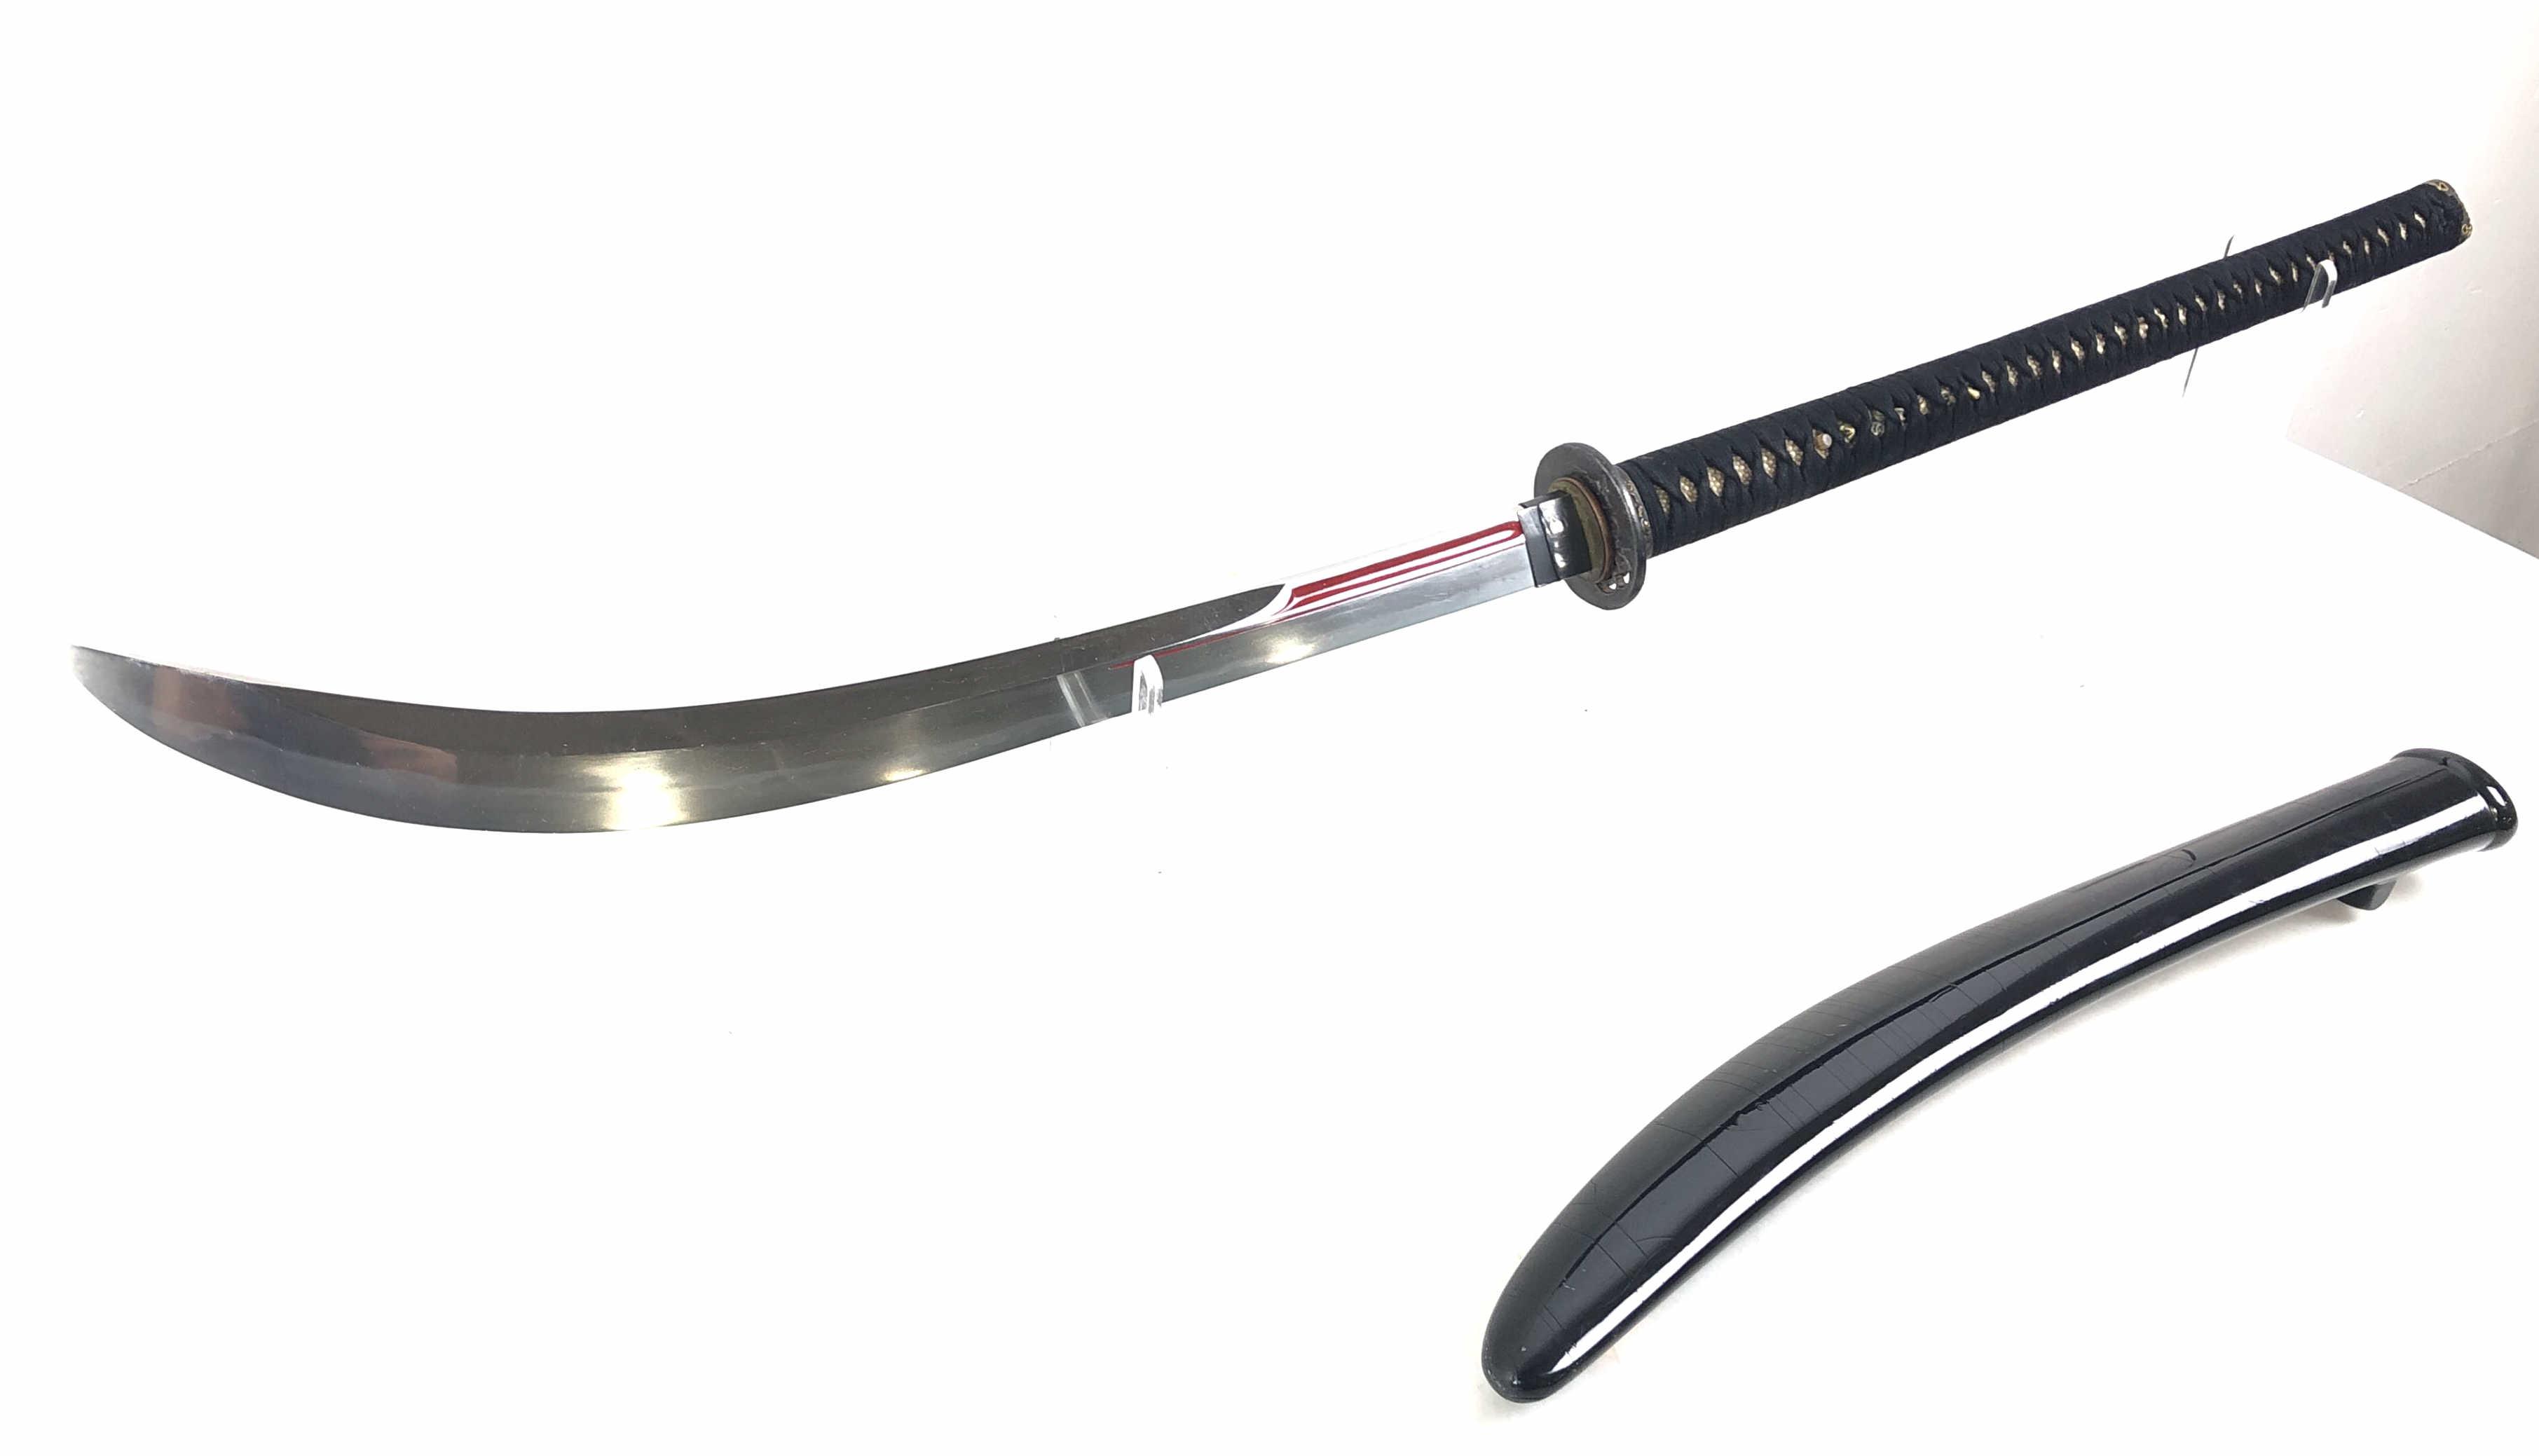 Vintage Japanese Nagamaki Samurai Sword